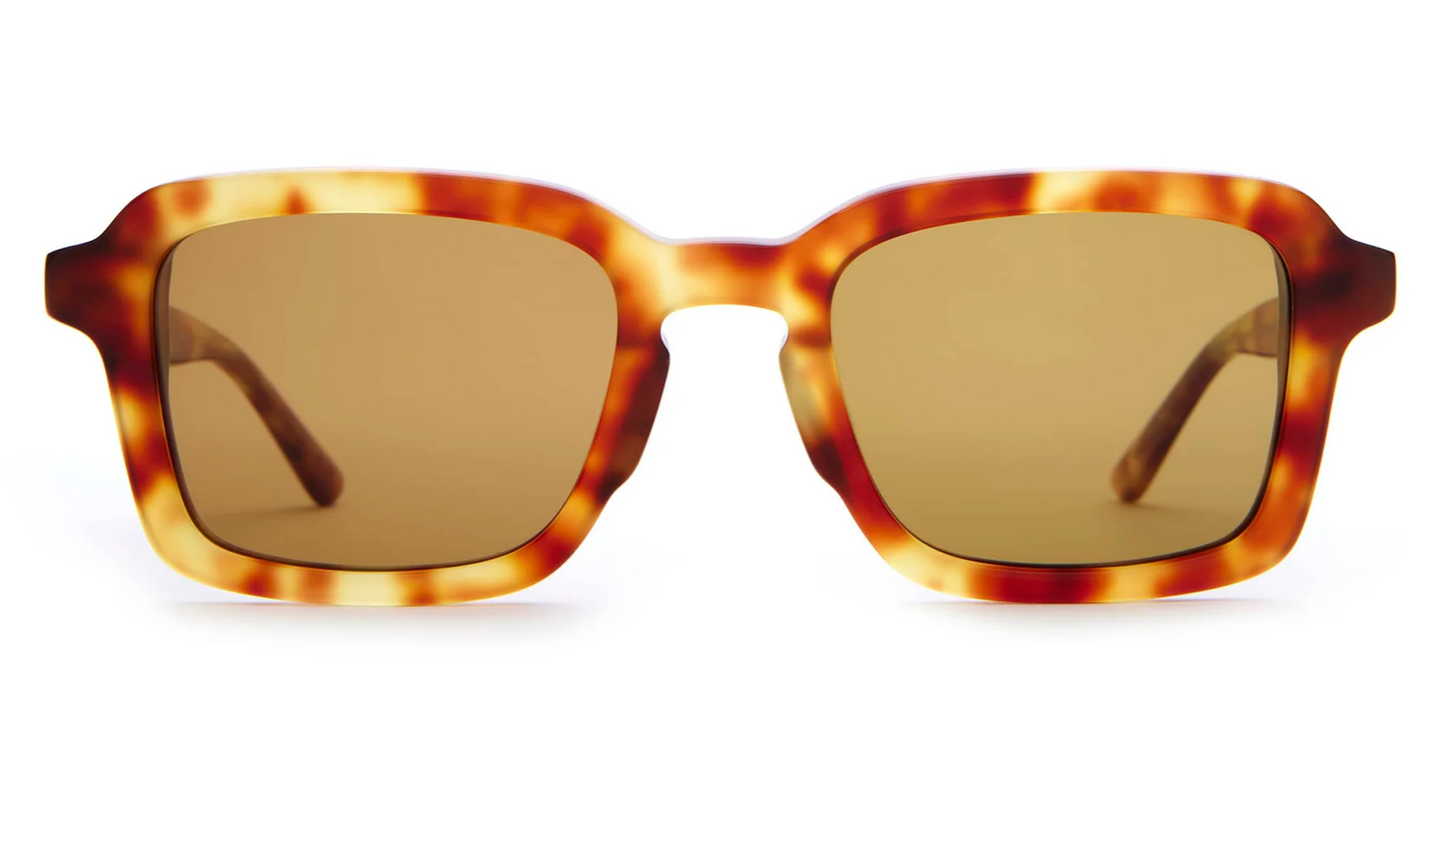 The Heavy Tropix Sunglasses by Crap Eyewear